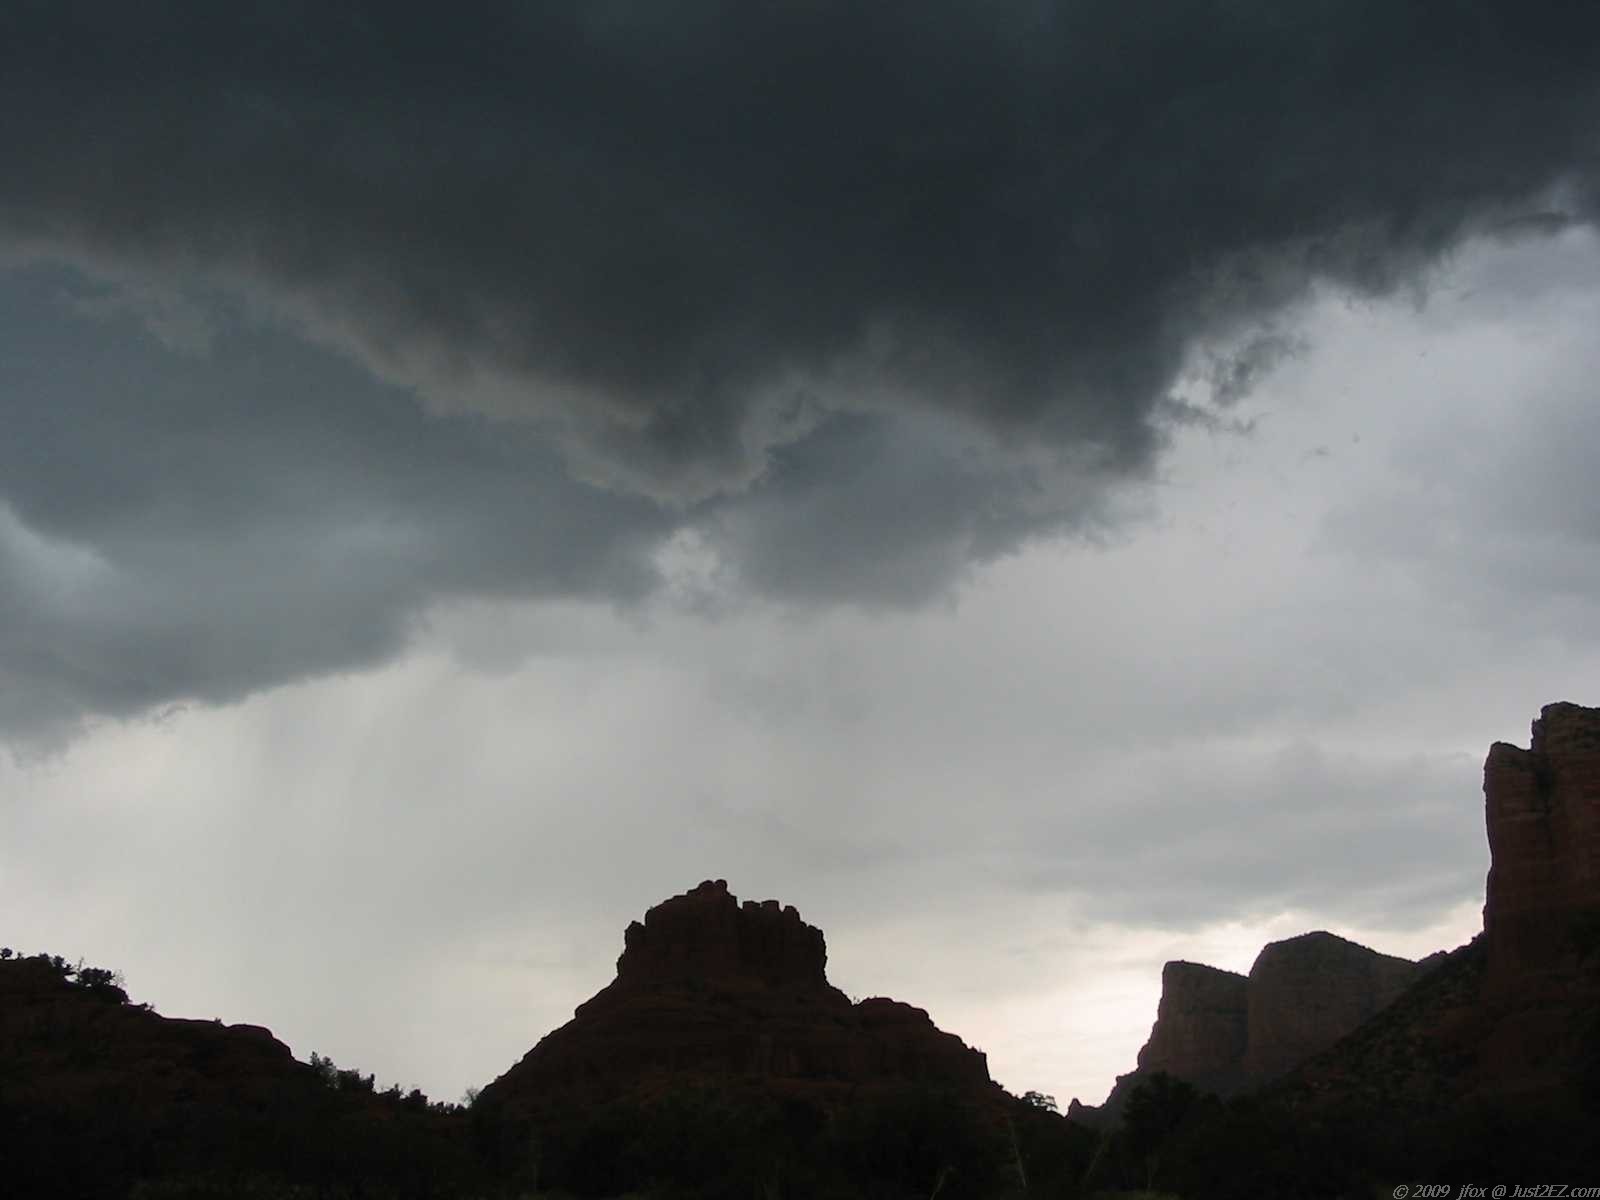 Bell Rock Clouds by jfox - Sedona, AZ